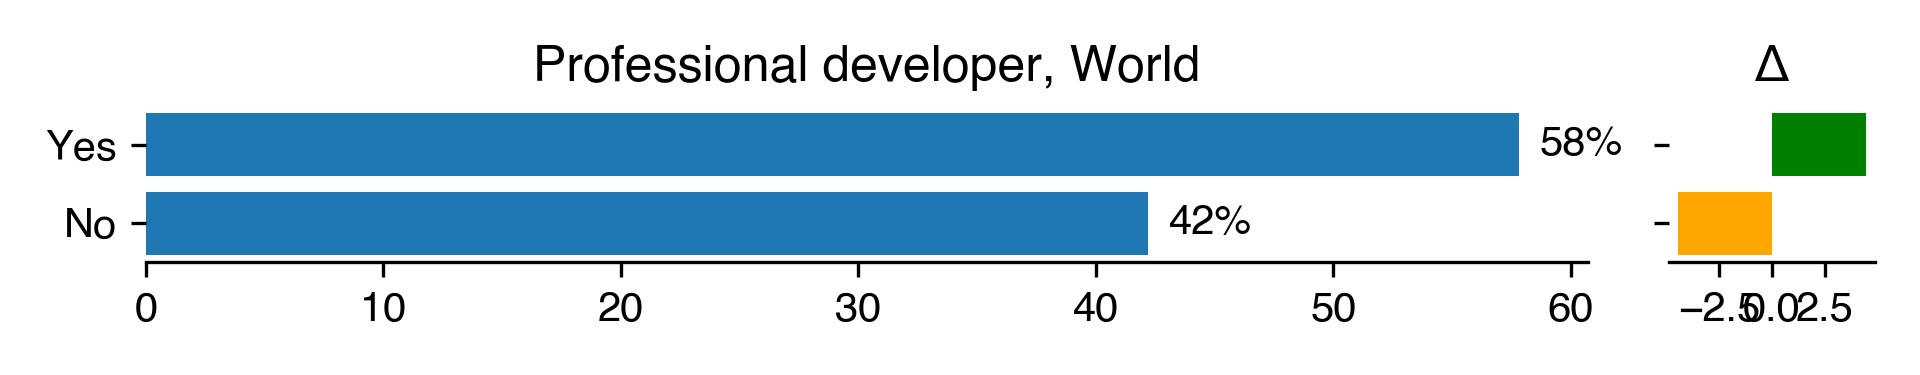 proportion-professional-developer